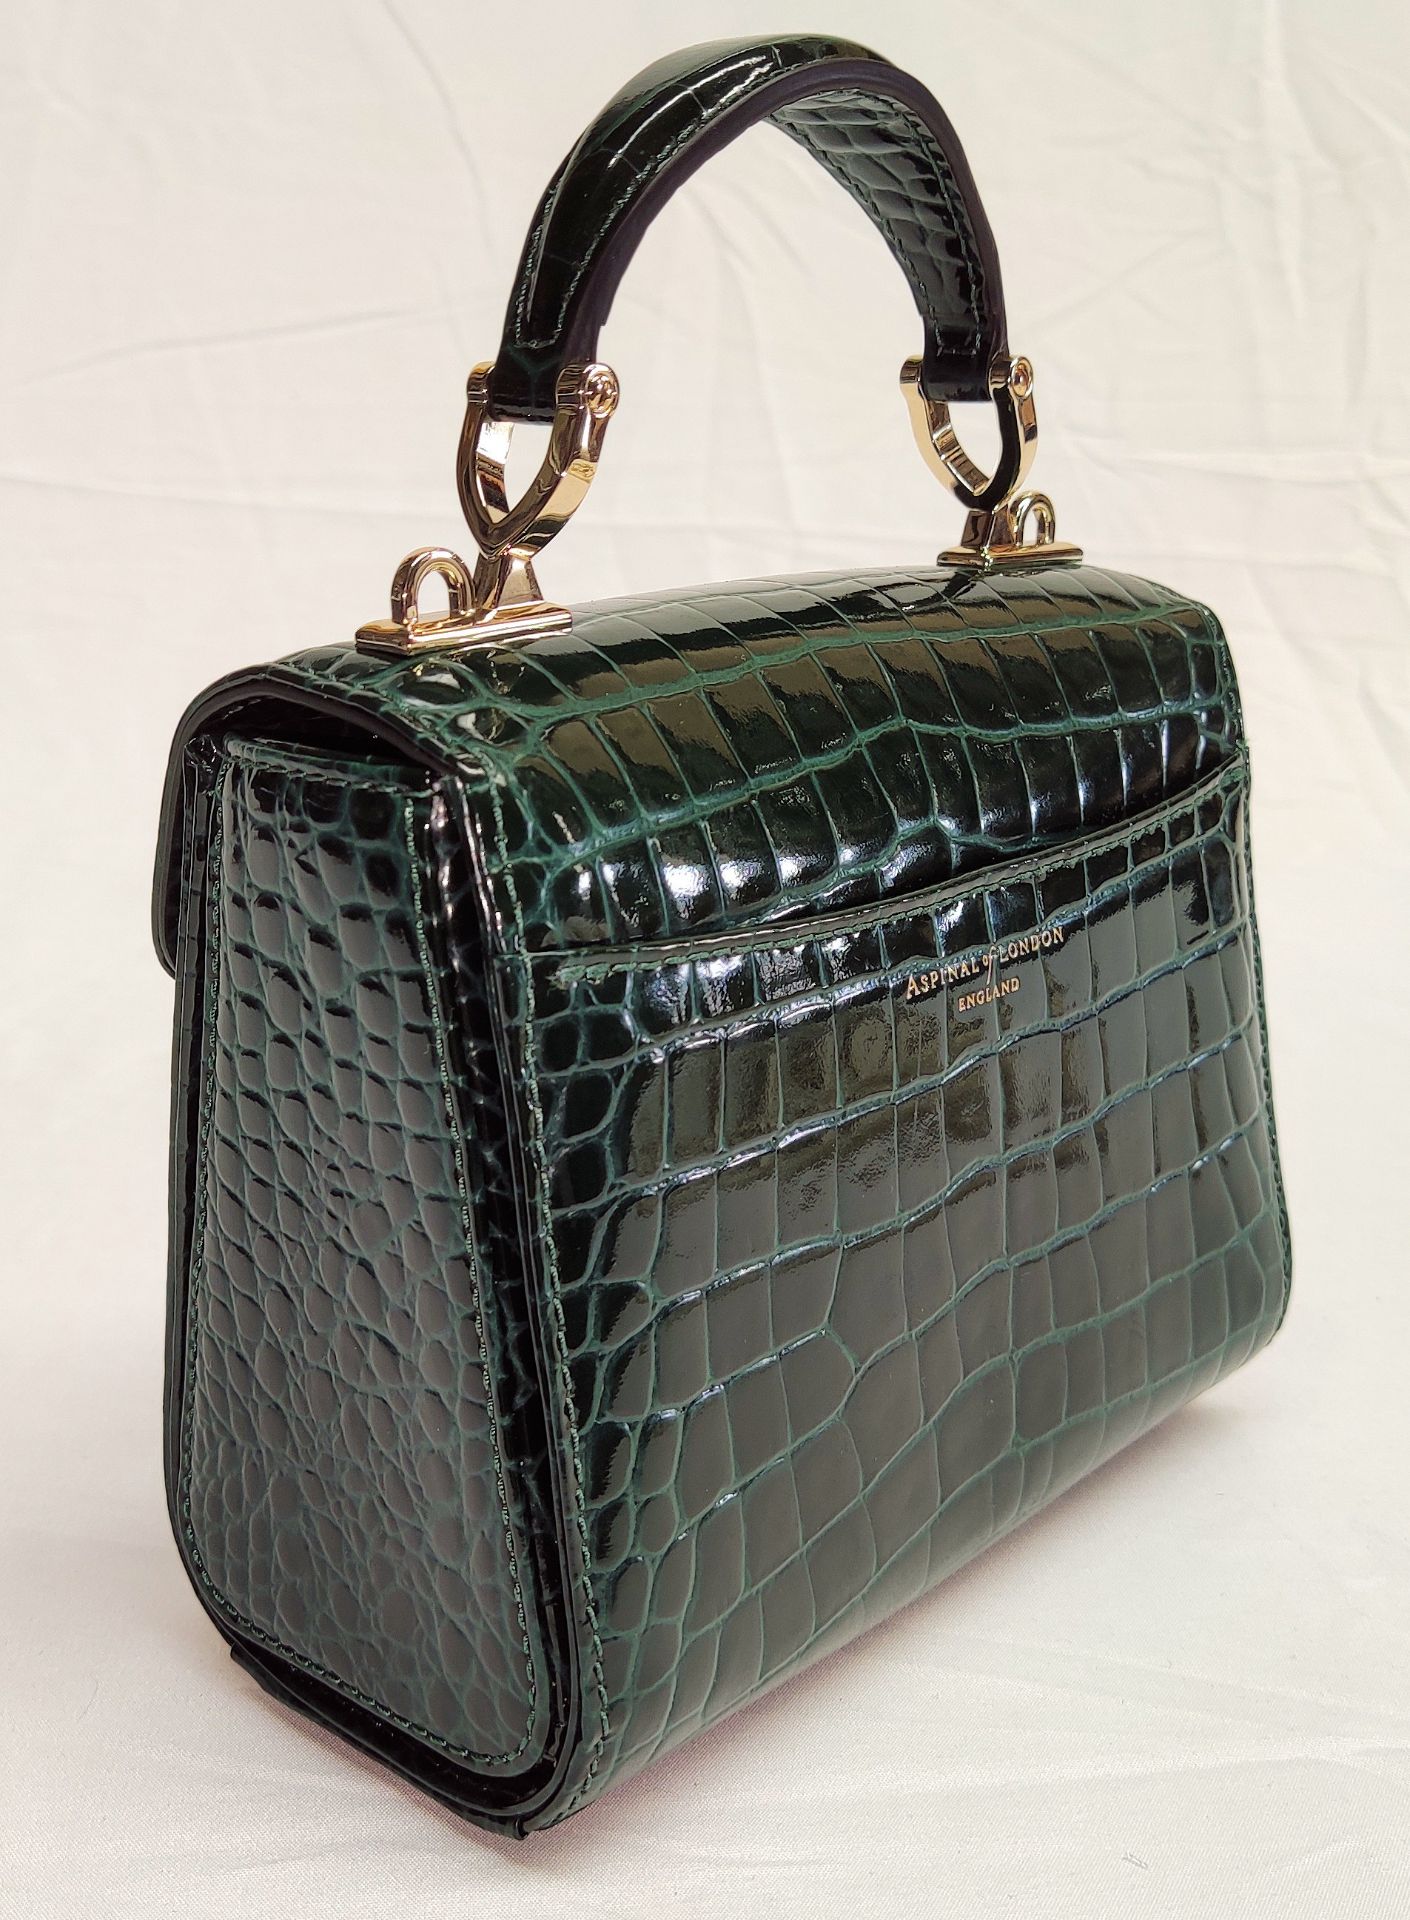 1 x ASPINAL OF LONDON Mayfair Mini Bag - Evergreen Patent Croc - Boxed - Original RRP £495 - Ref: - Image 15 of 21